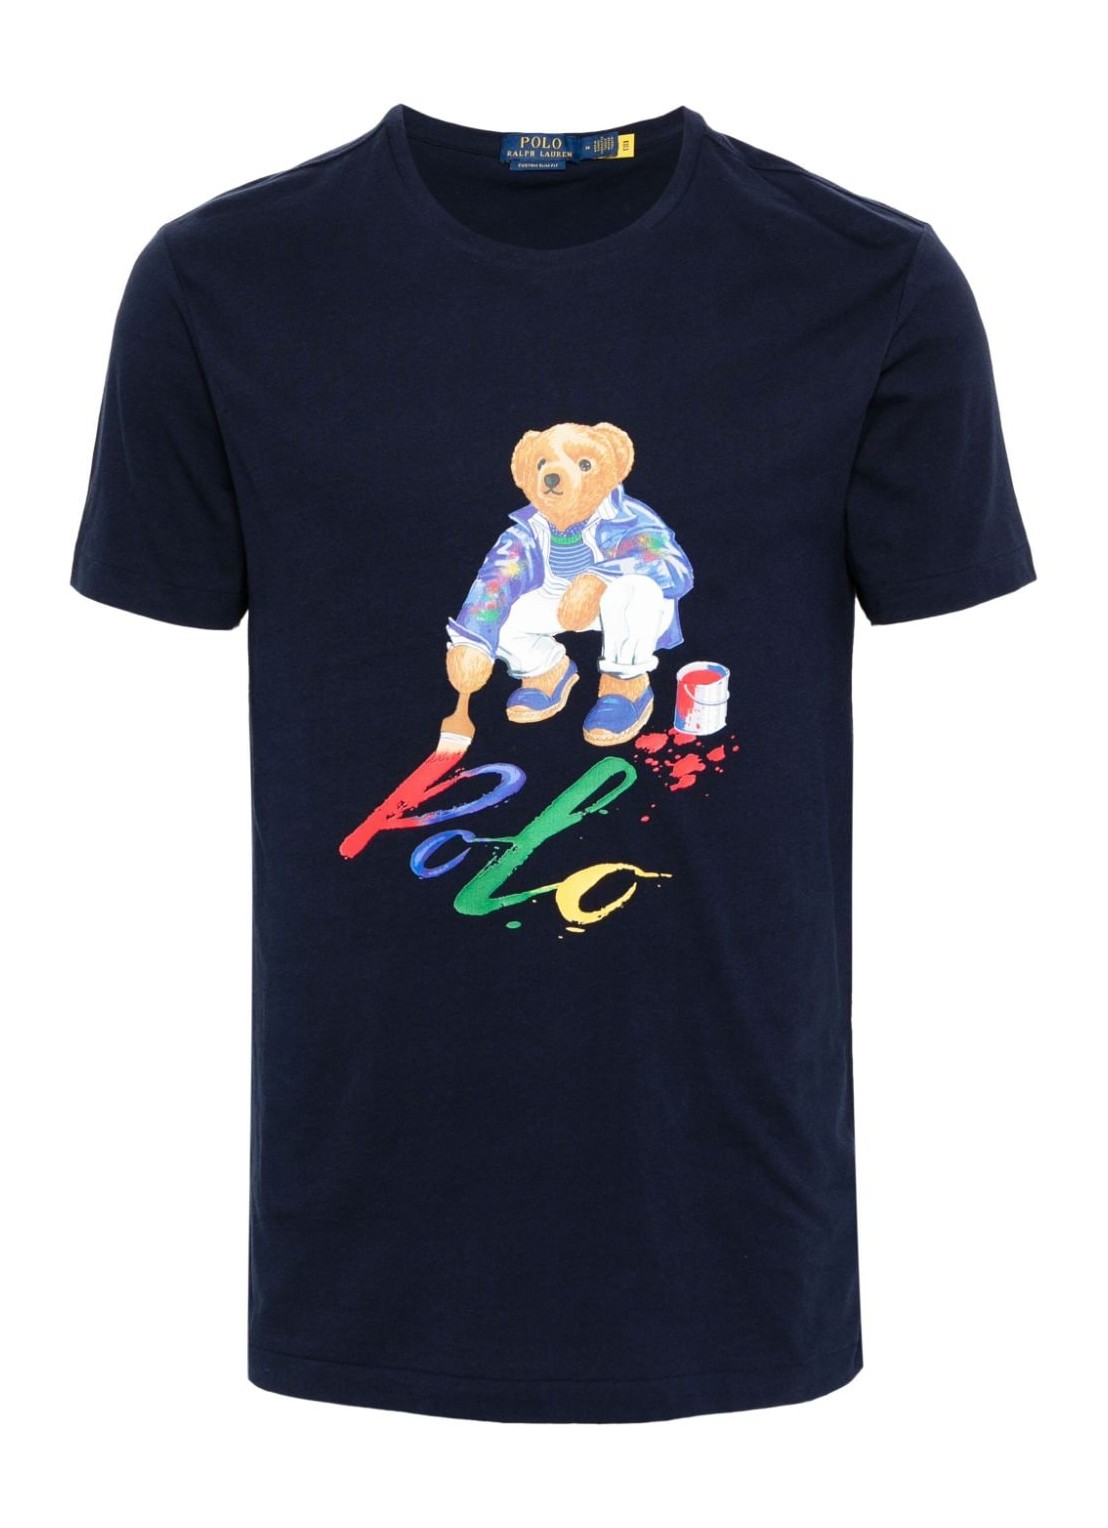 Camiseta polo ralph lauren t-shirt man sscncmslm1-short sleeve-t-shirt 710853310025 cr23 cruise navy